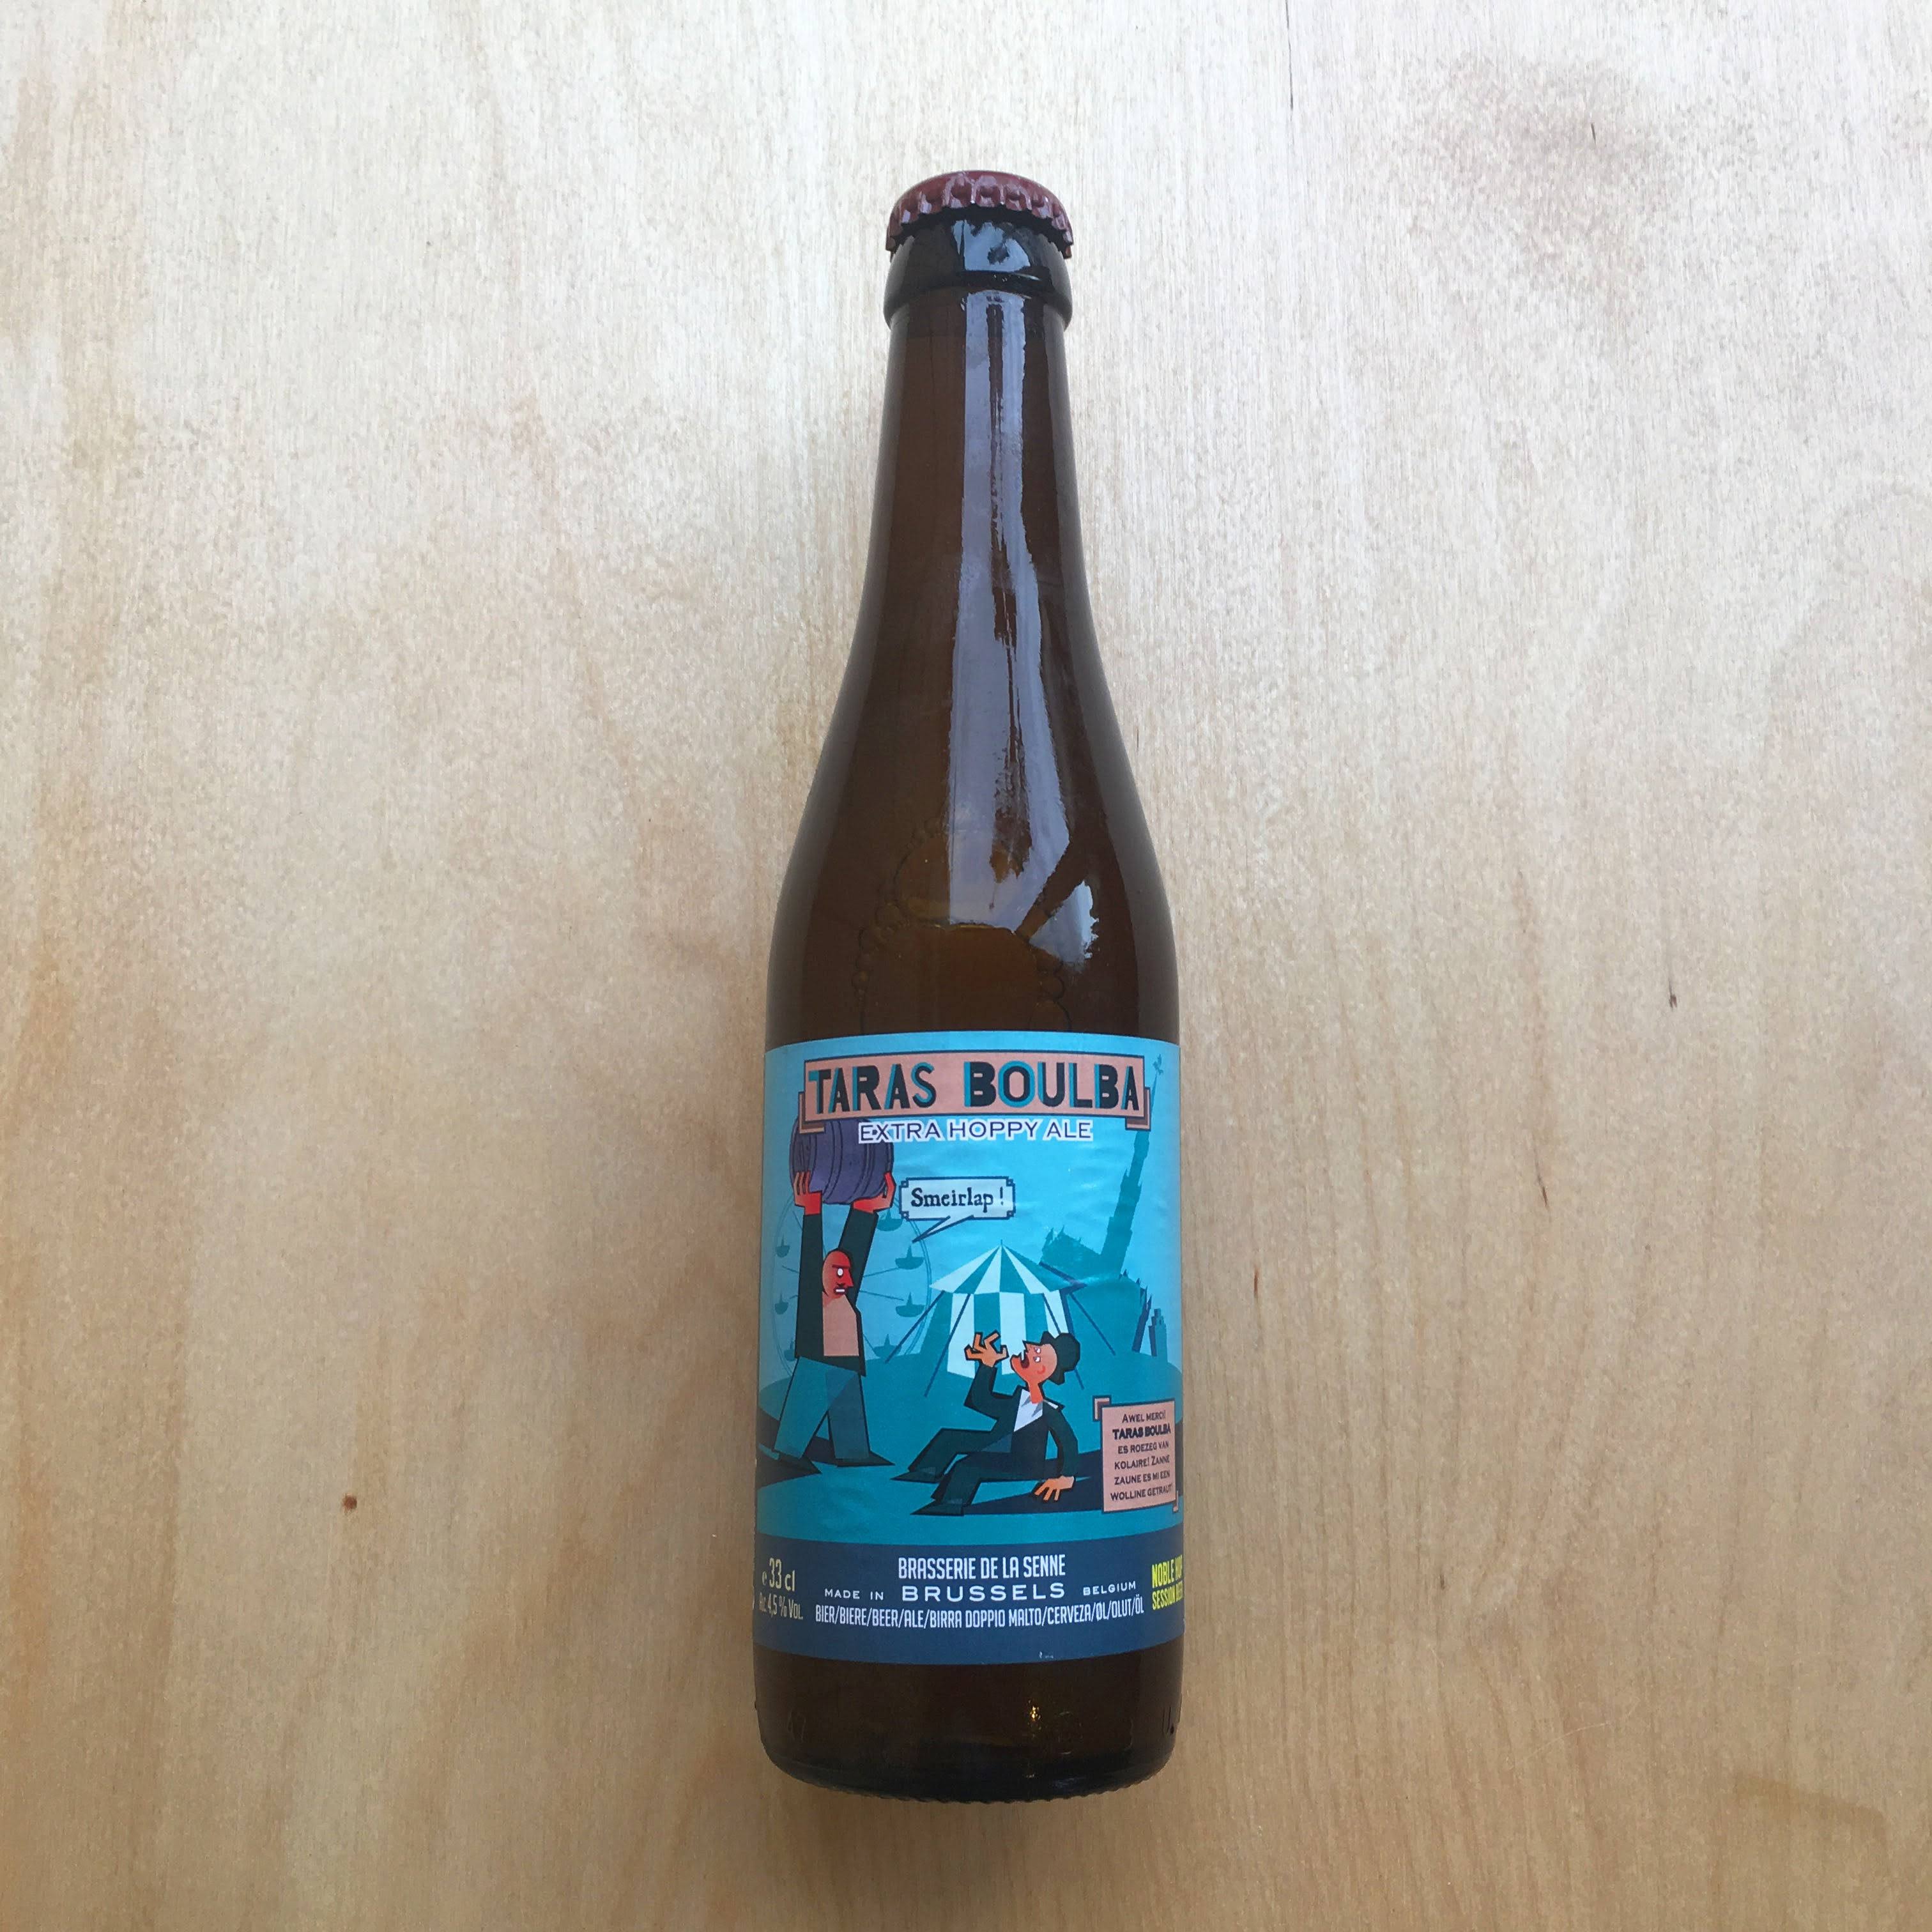 Taras Boulba Belgian Blond Ale - 330ml